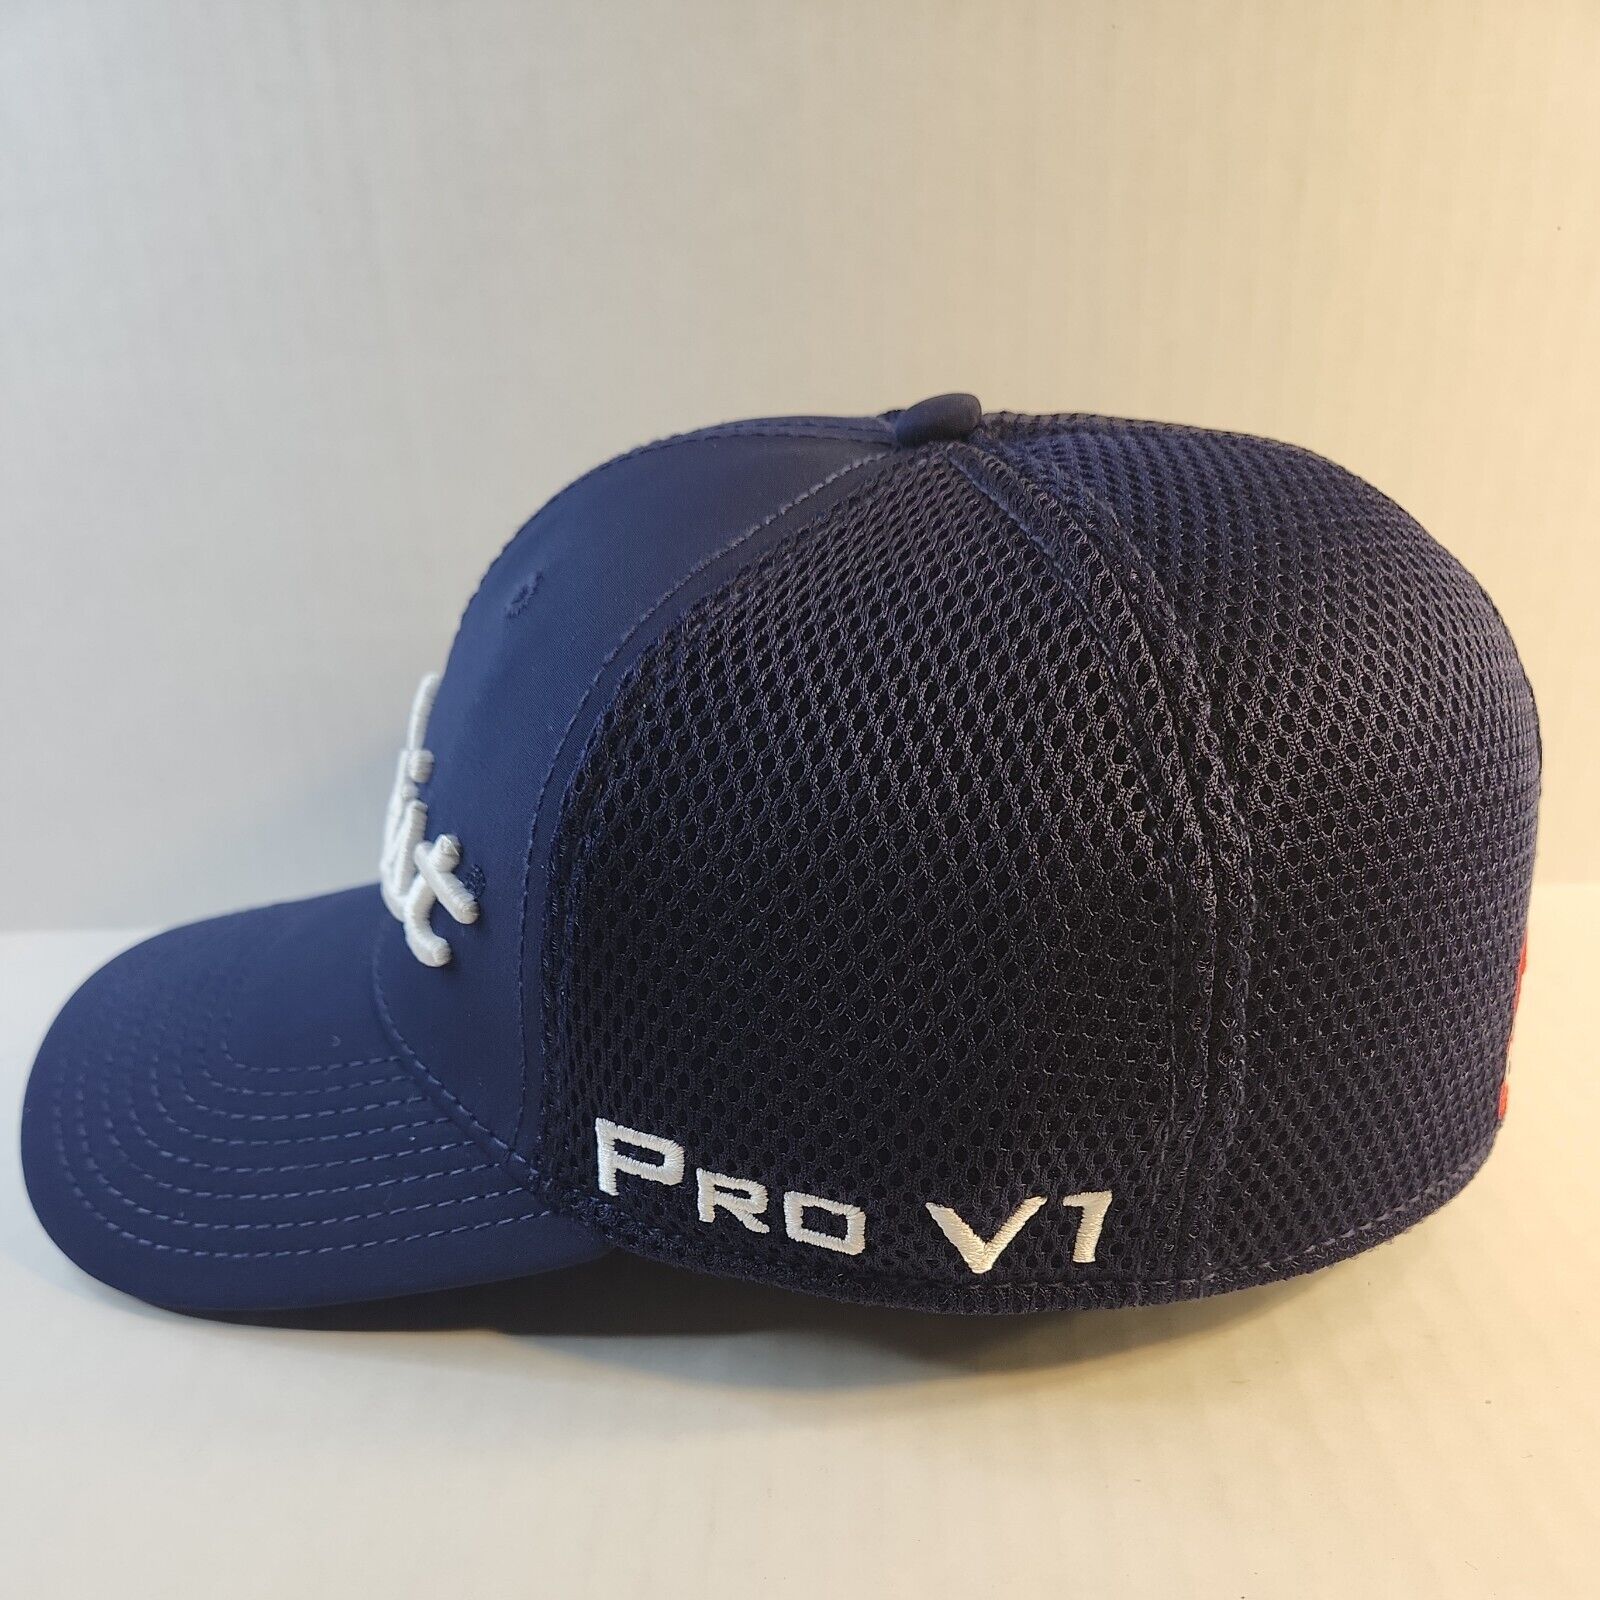 Titleist Pro V1 FJ New Era Fitted Large-XLarge Navy White Neo Mesh Golf Cap Hat